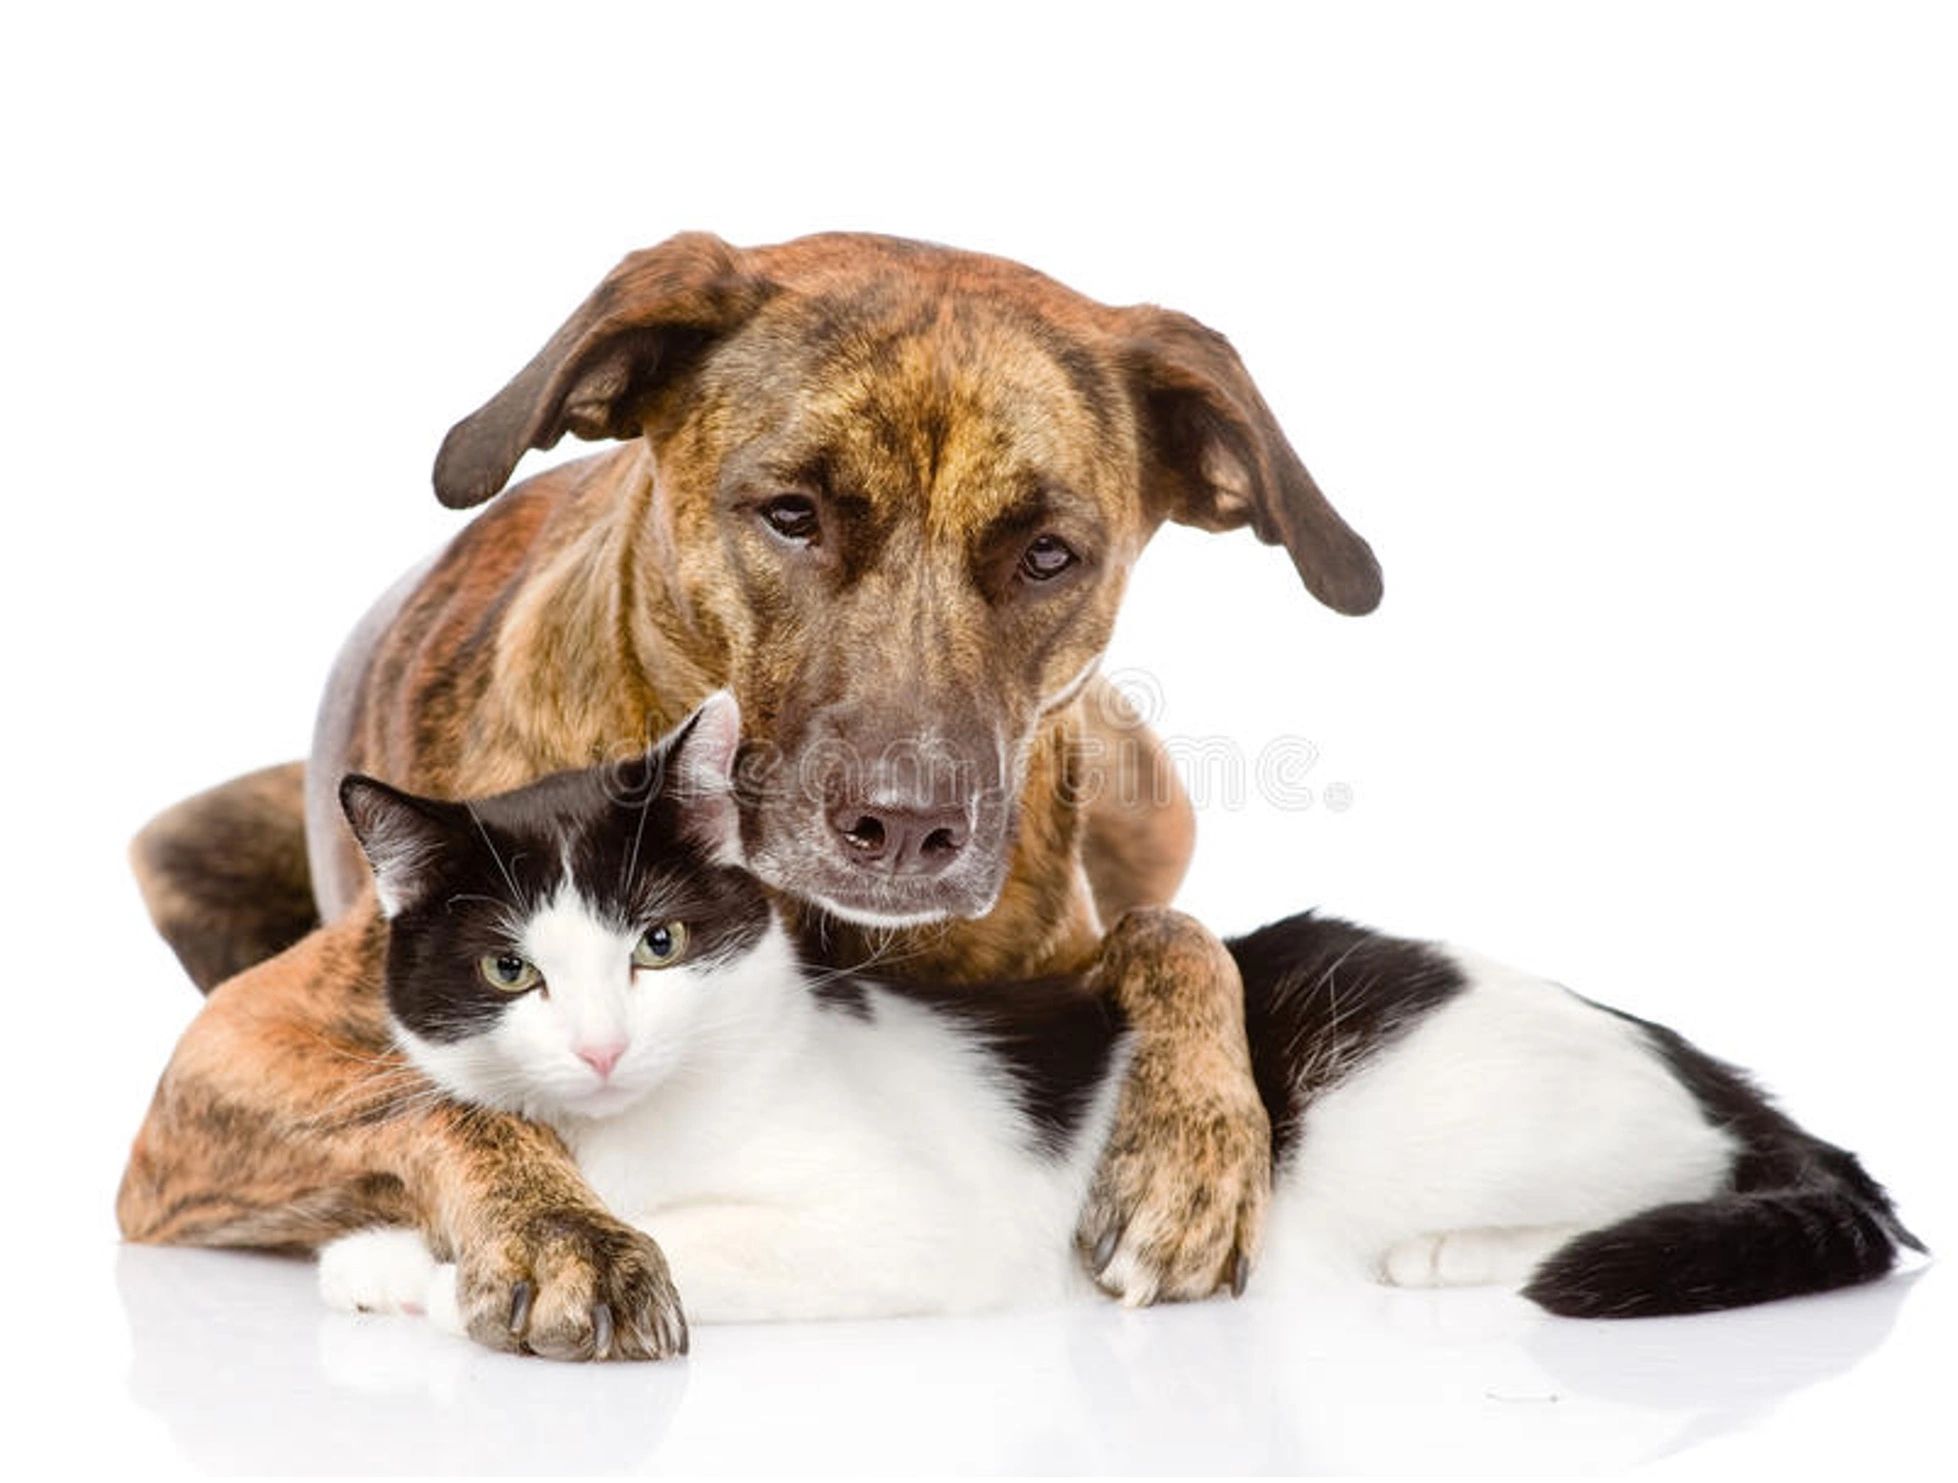 Cat Programs - Ventura County Animal Services